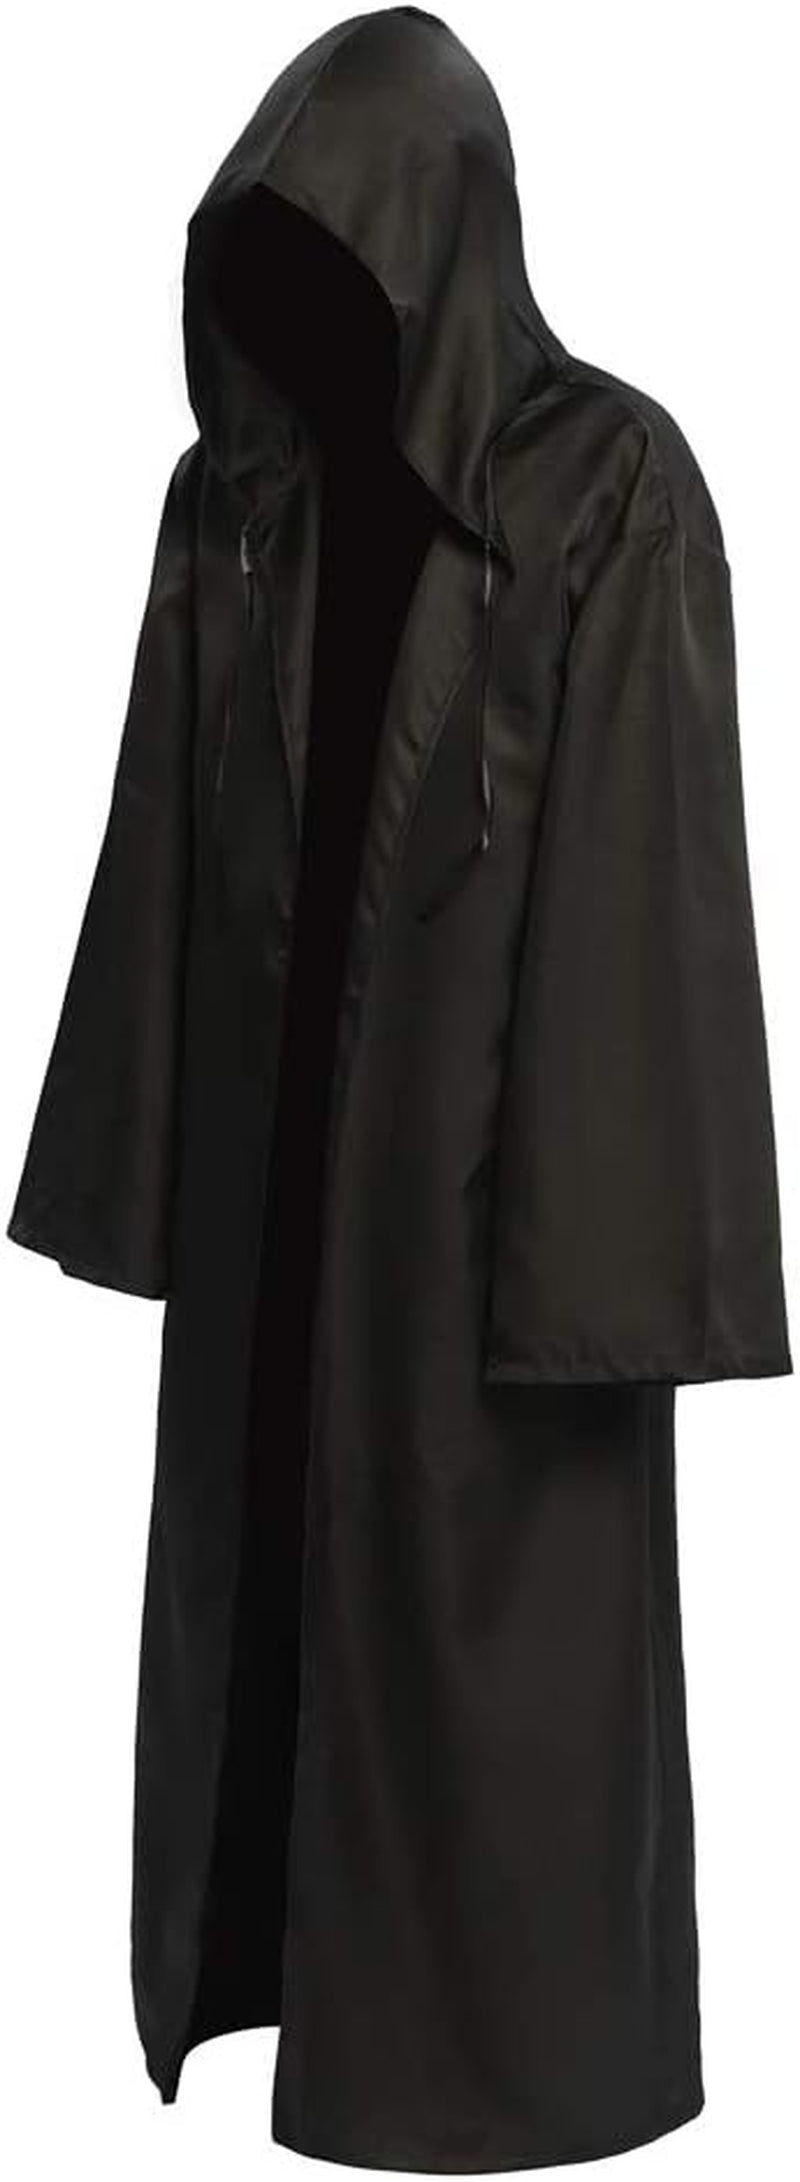 EONPOW Wizard Tunic Hooded Robe Halloween Cloak Cosplay Costumes  EONPOW Black Medium 